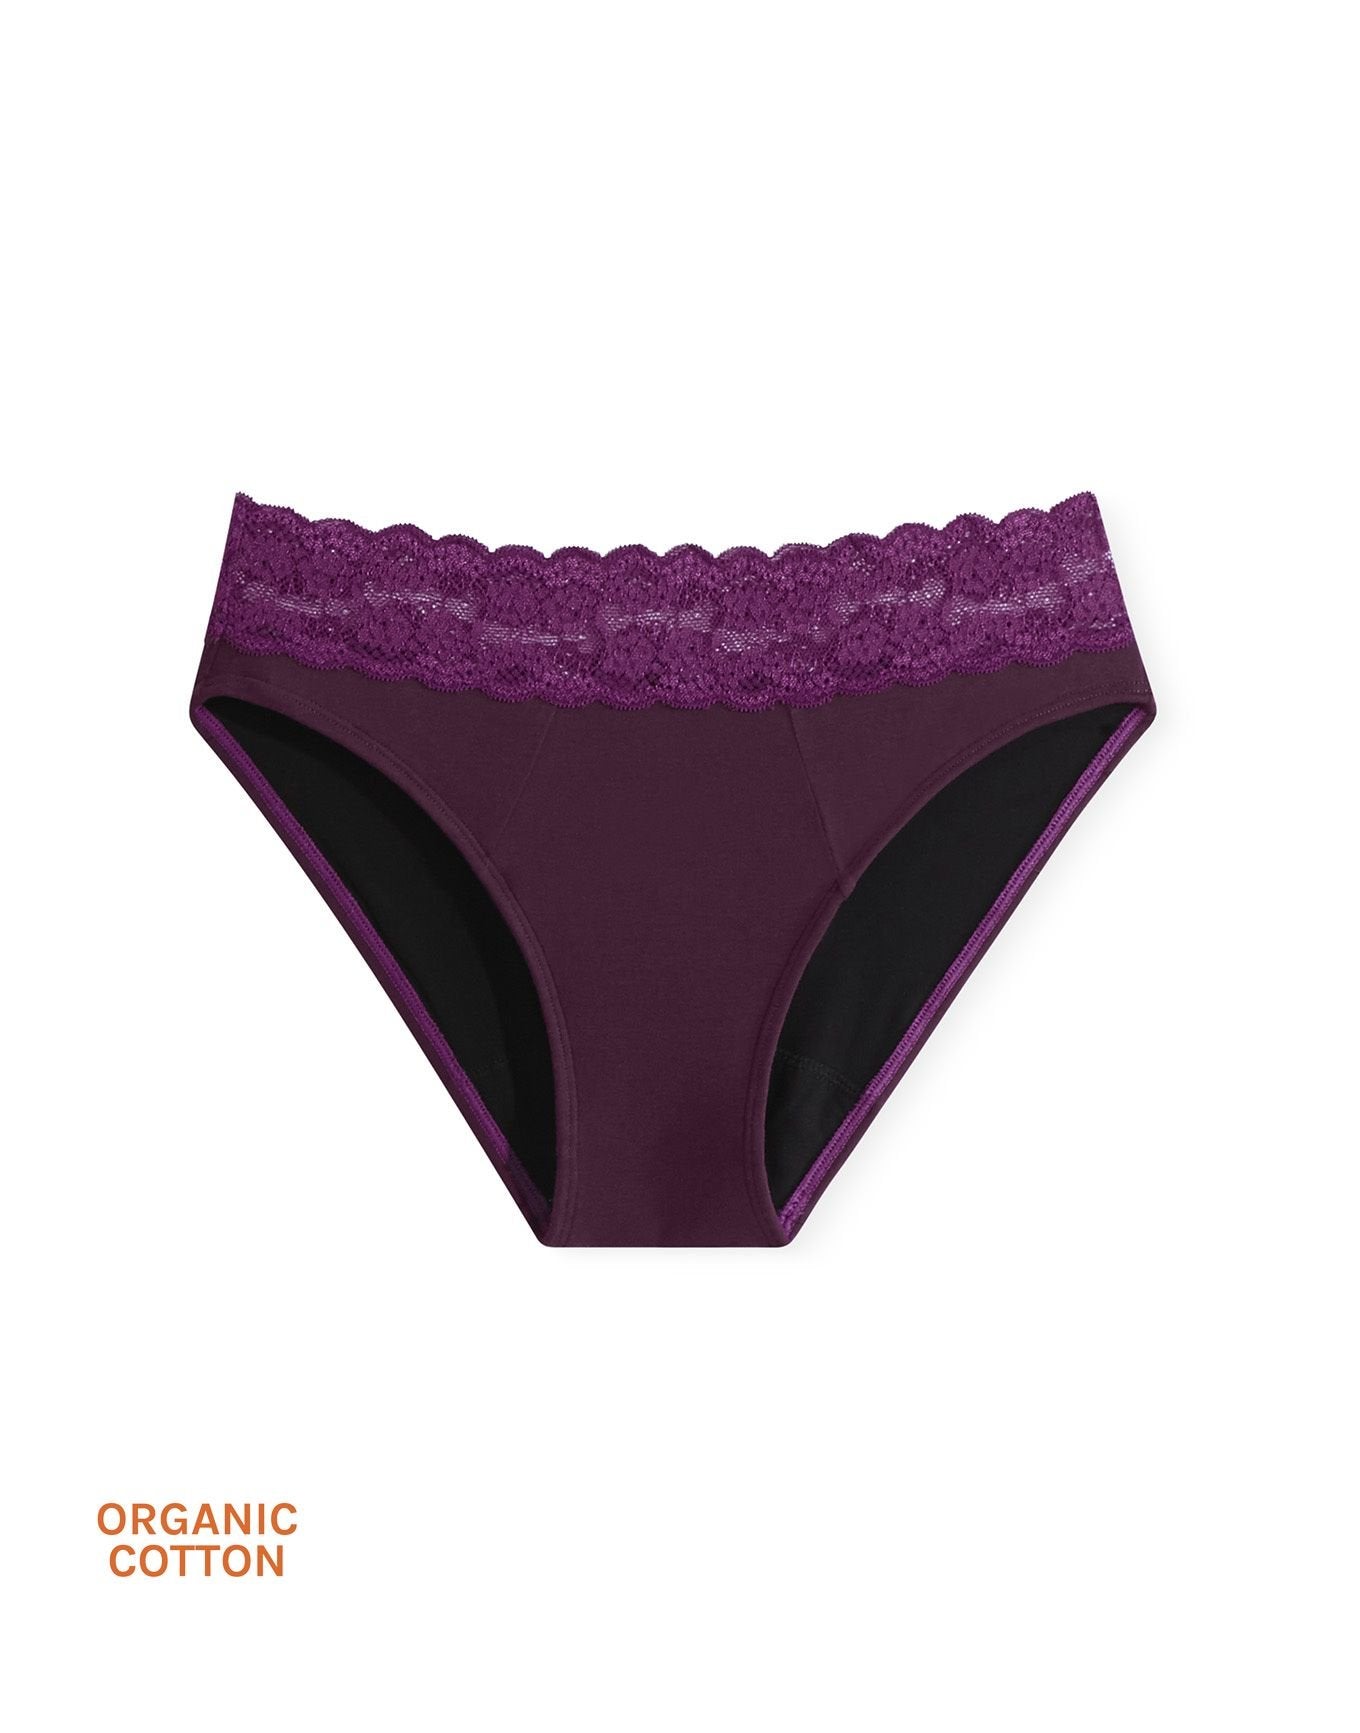 Joyja Alice period-proof panty in color Potent Purple and shape bikini